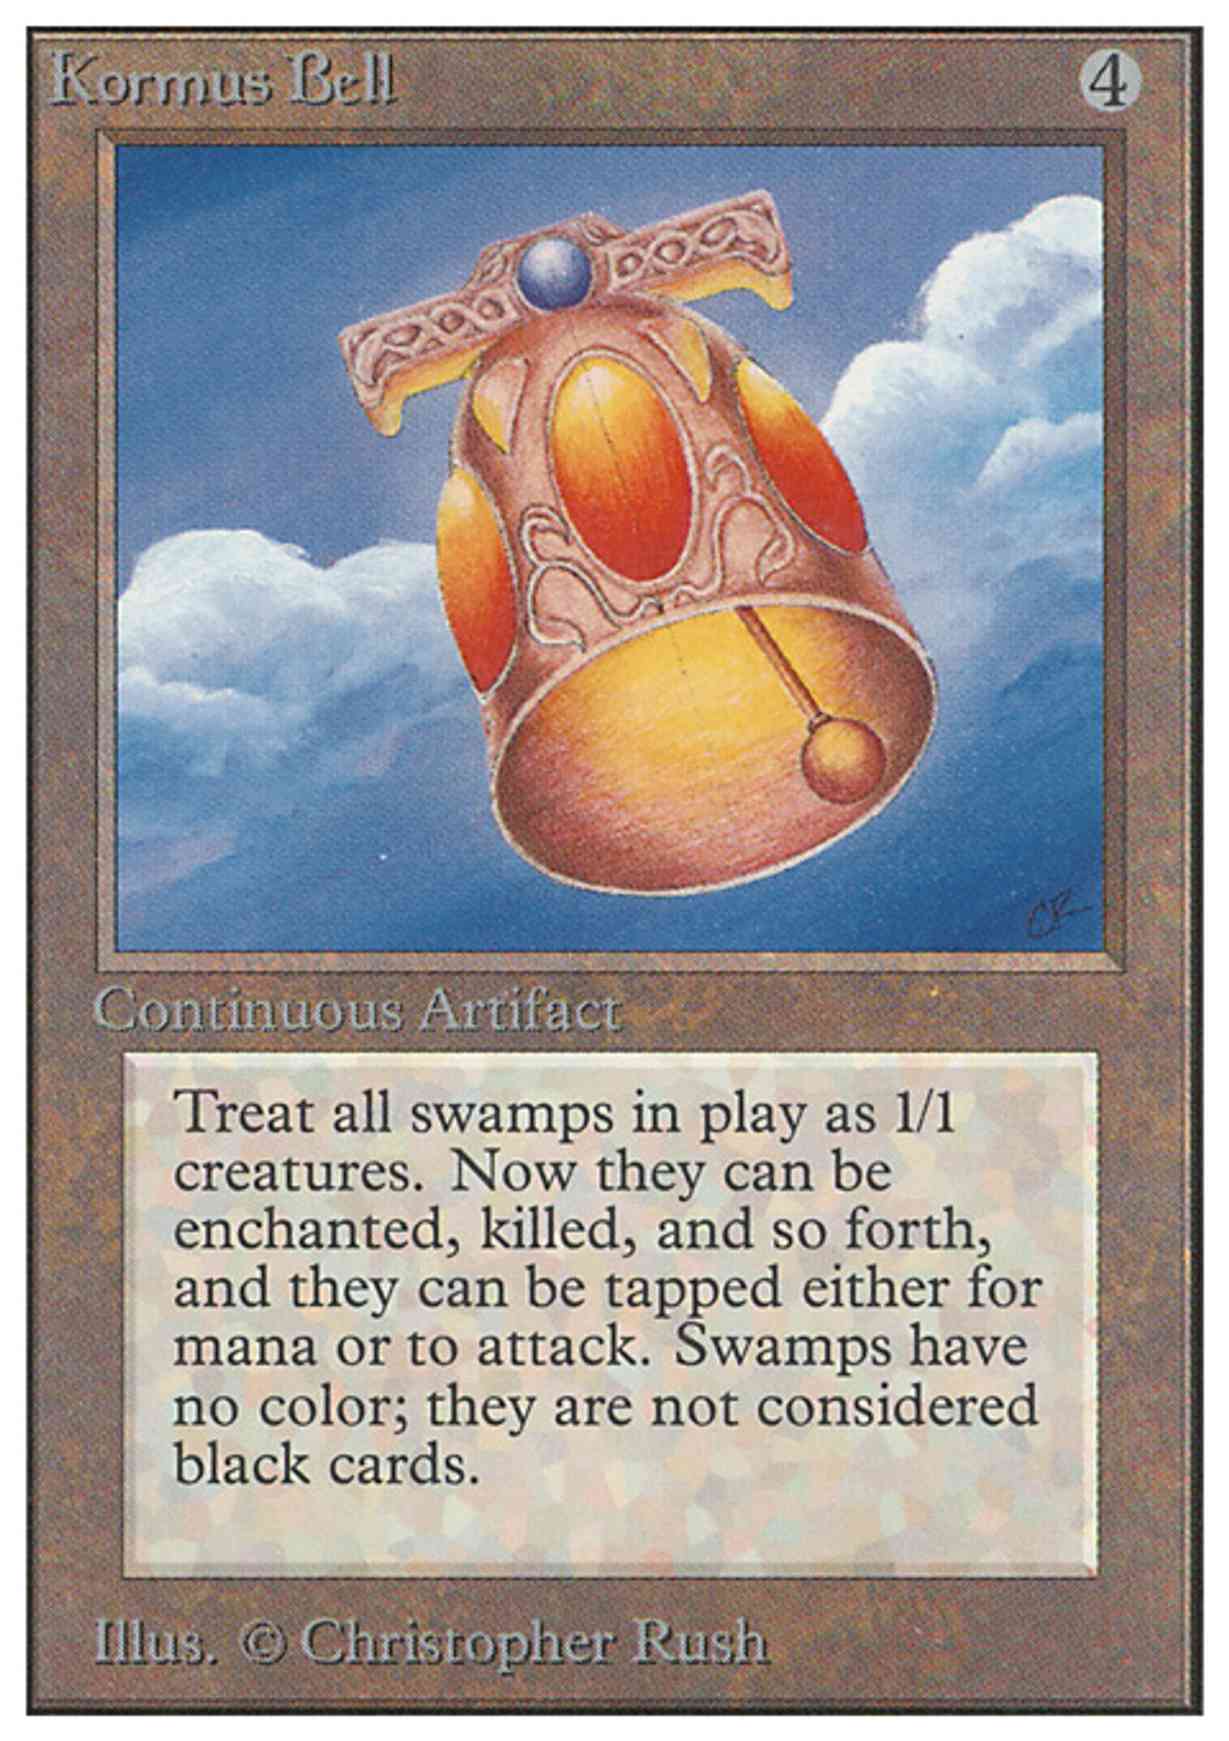 Kormus Bell magic card front